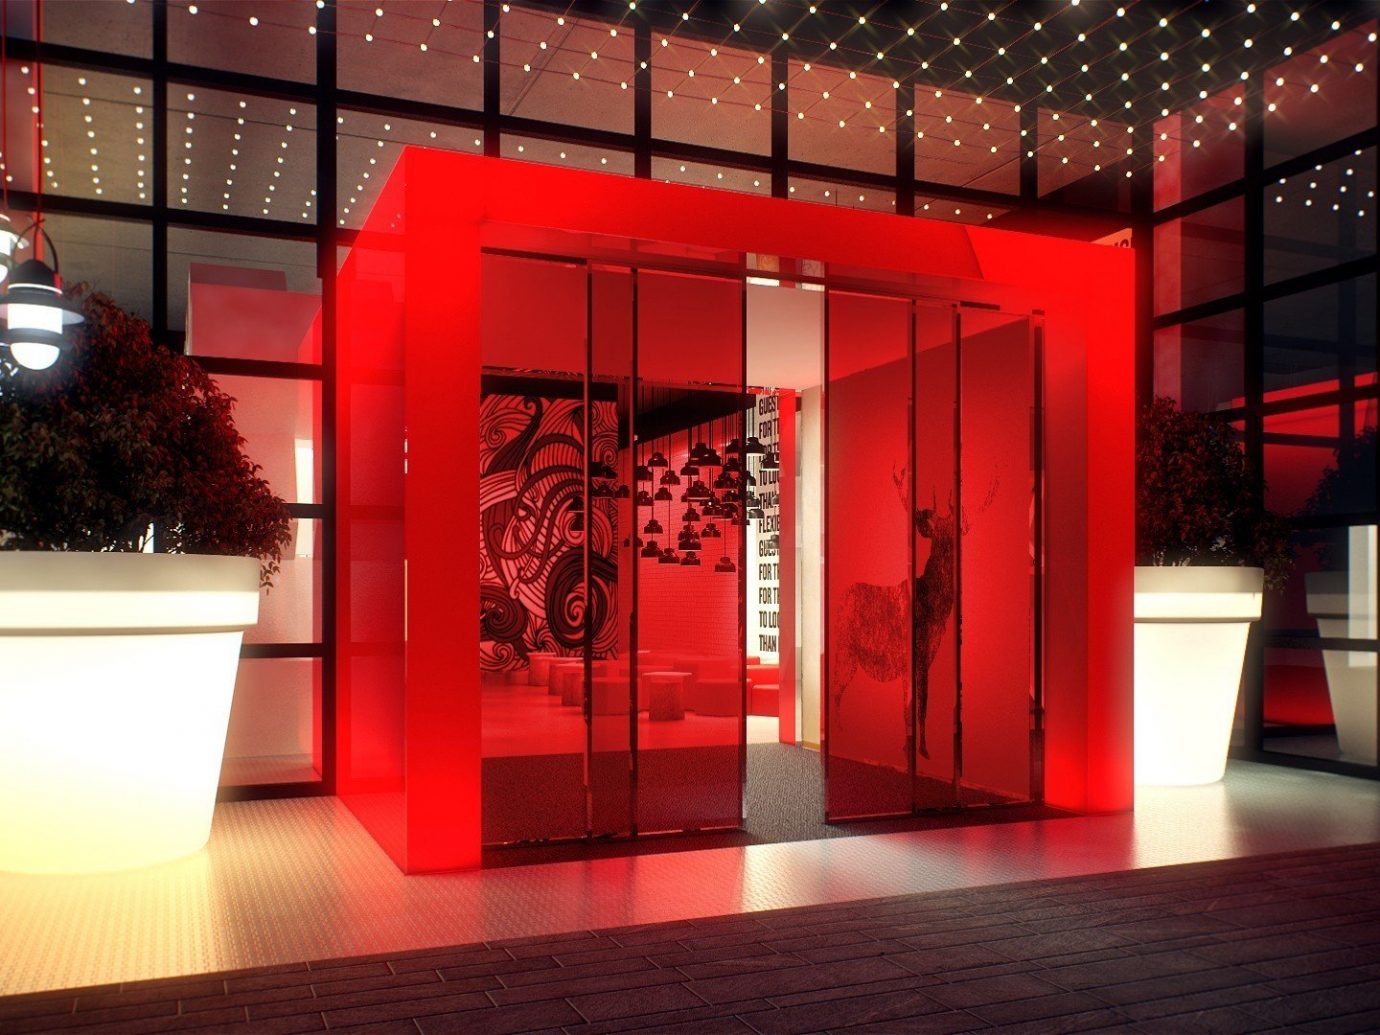 Hotels floor red indoor interior design Design Lobby display window retail tourist attraction